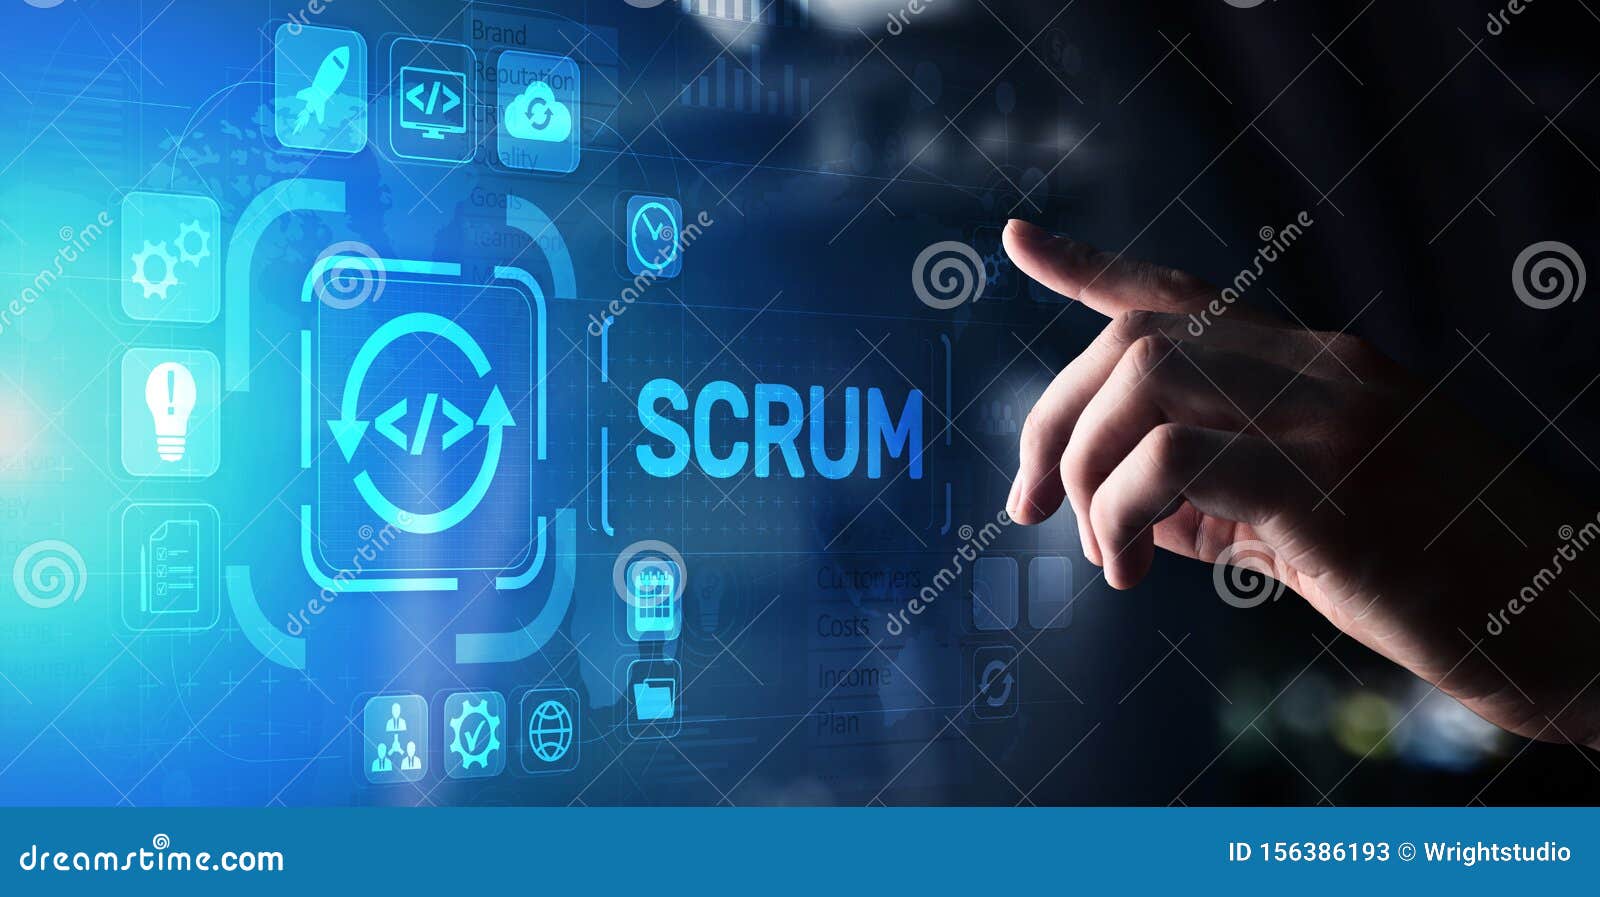 SCRUM, Agile Development Methodology, Programming and Application ...